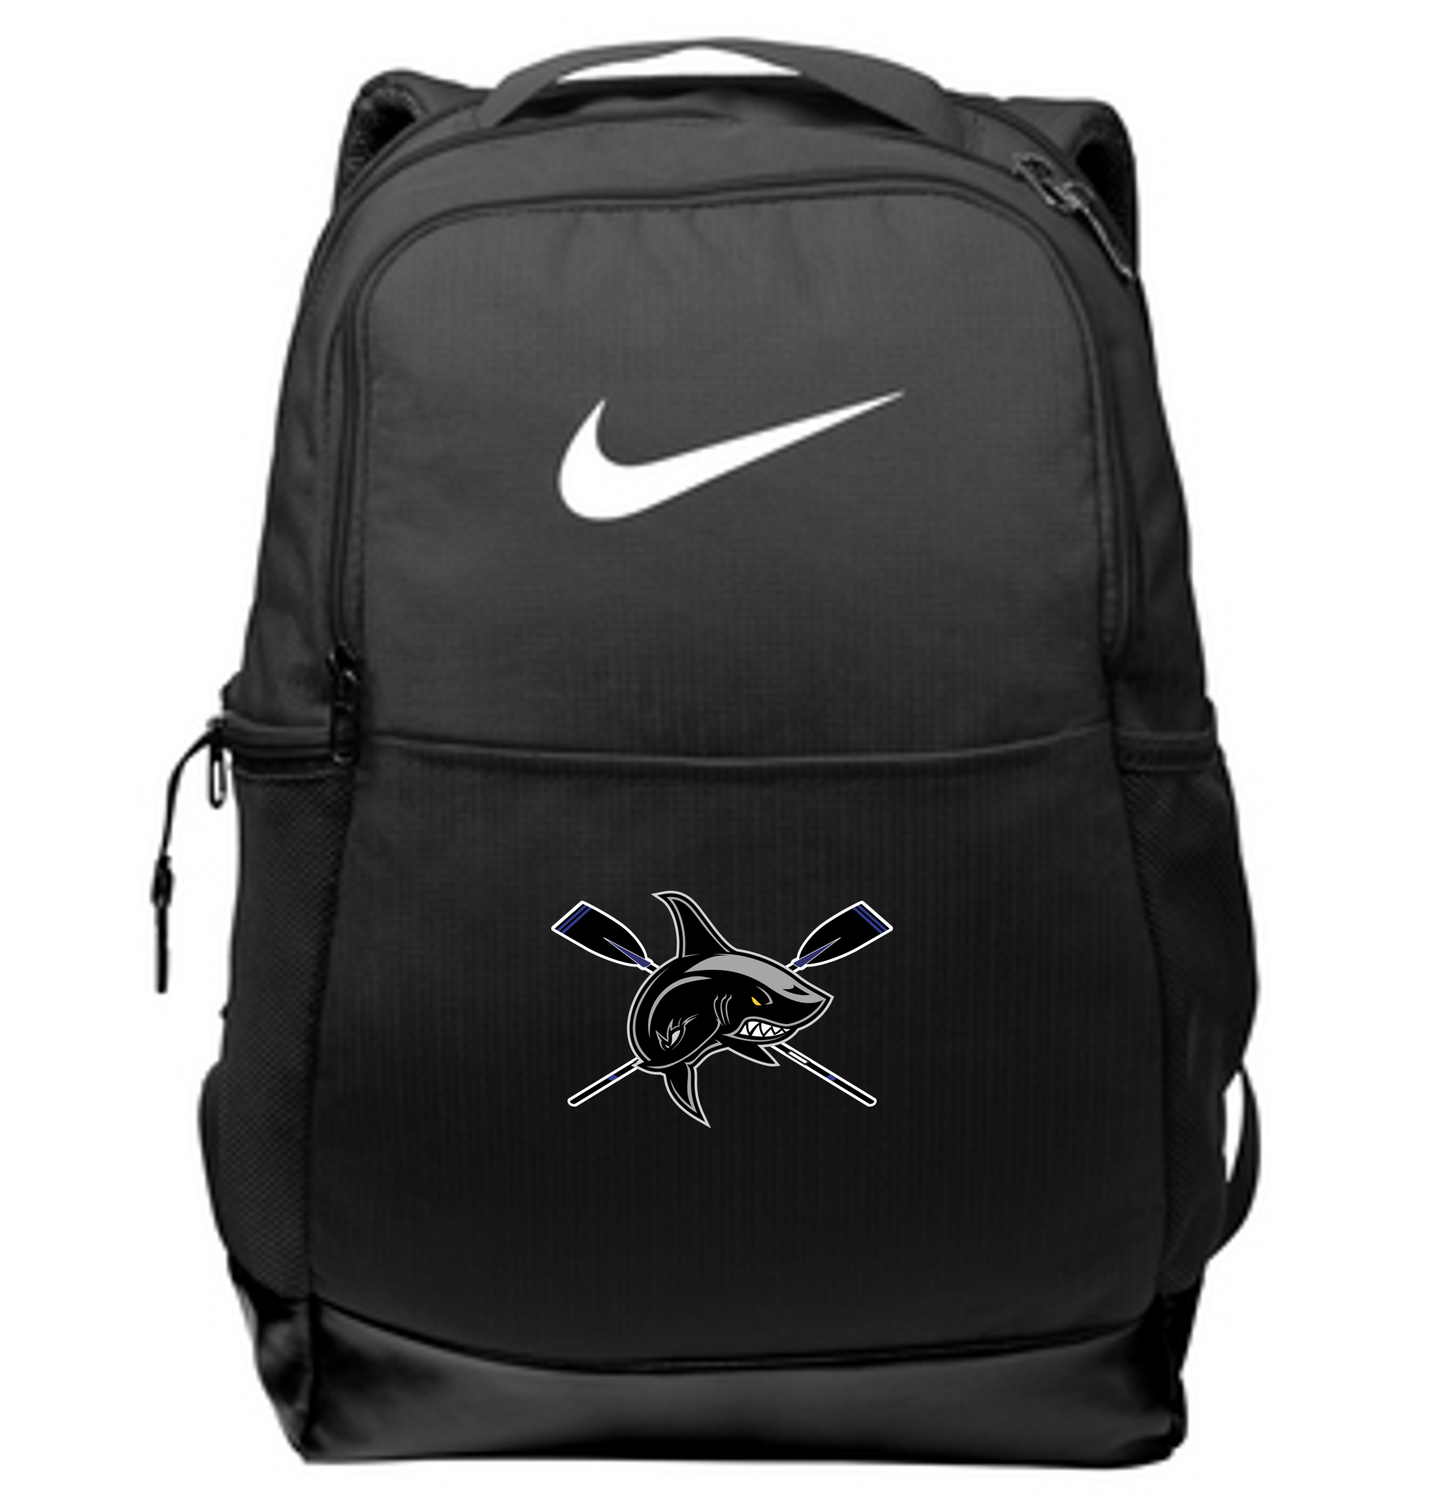 Backpack, Nike Brasilia Medium Backpack with Shark Embroidered black backpack